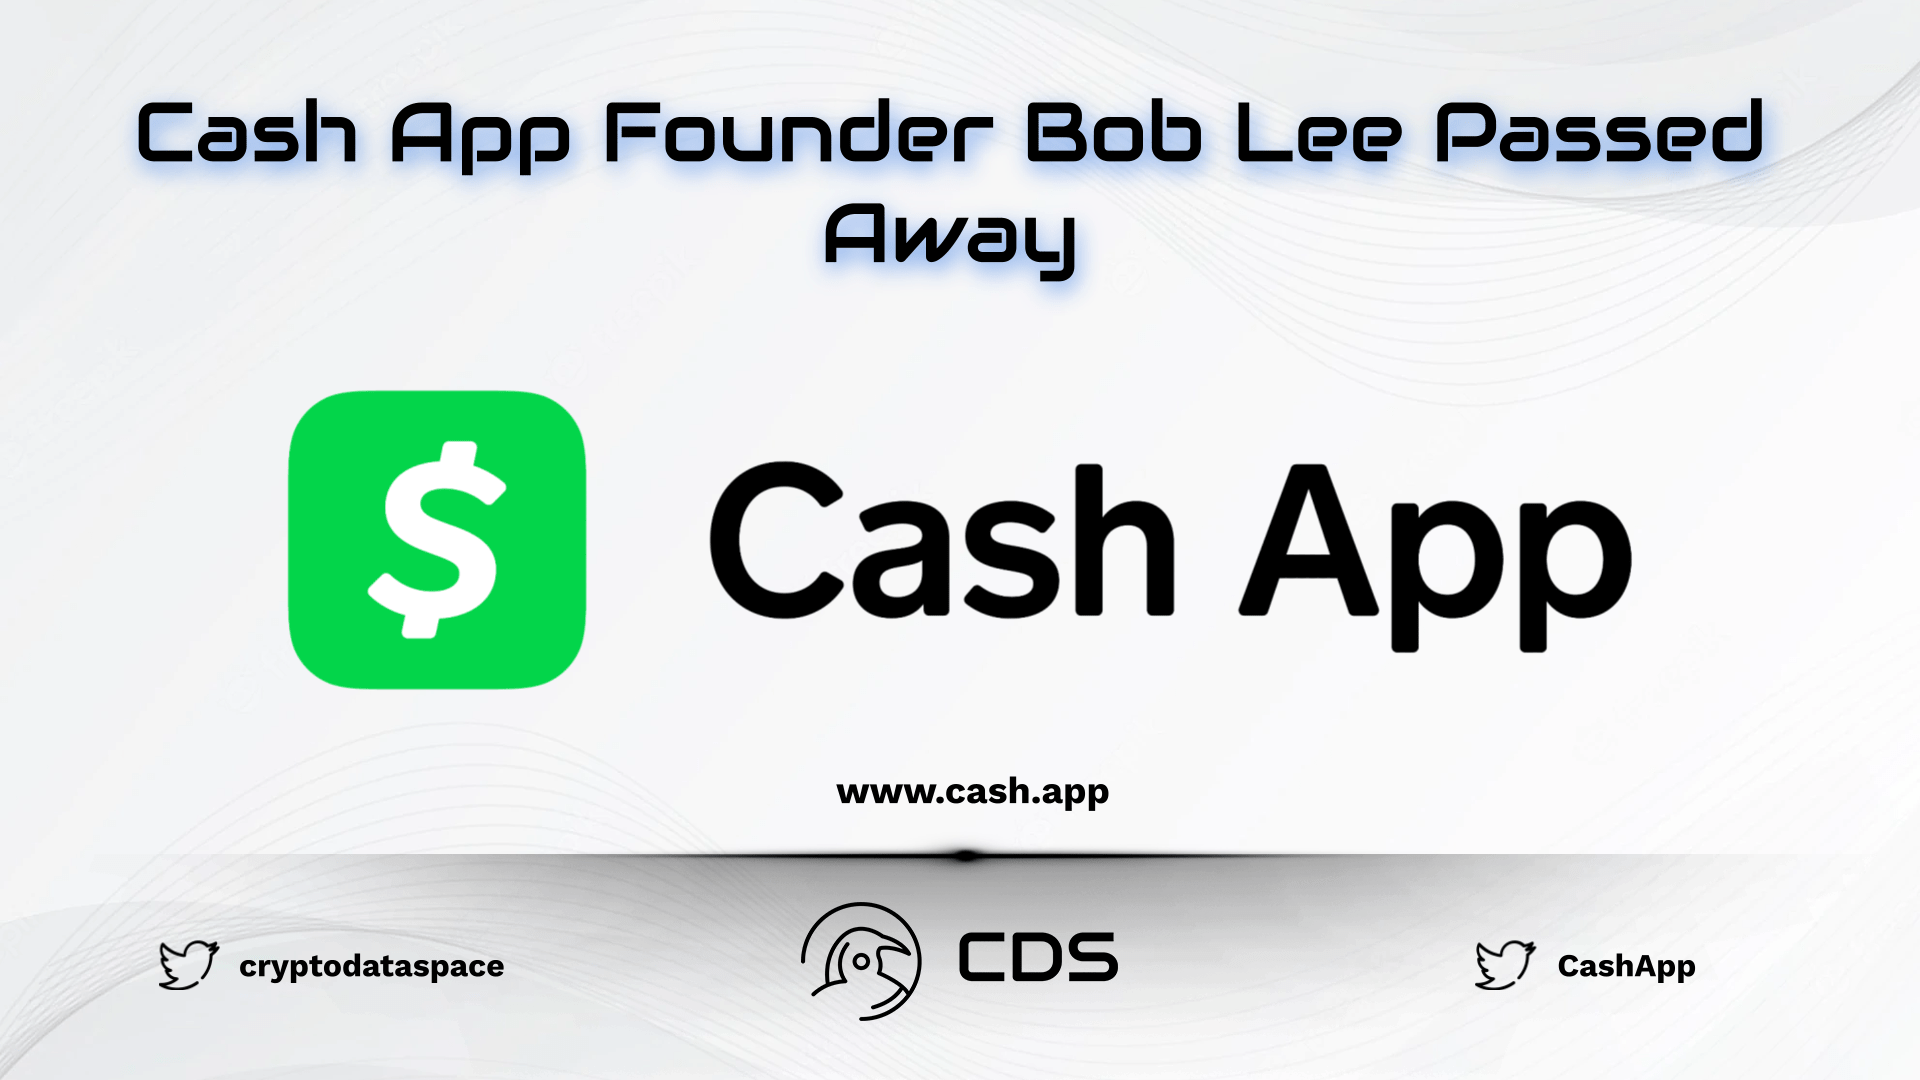 Cash App Founder Bob Lee Passed Away